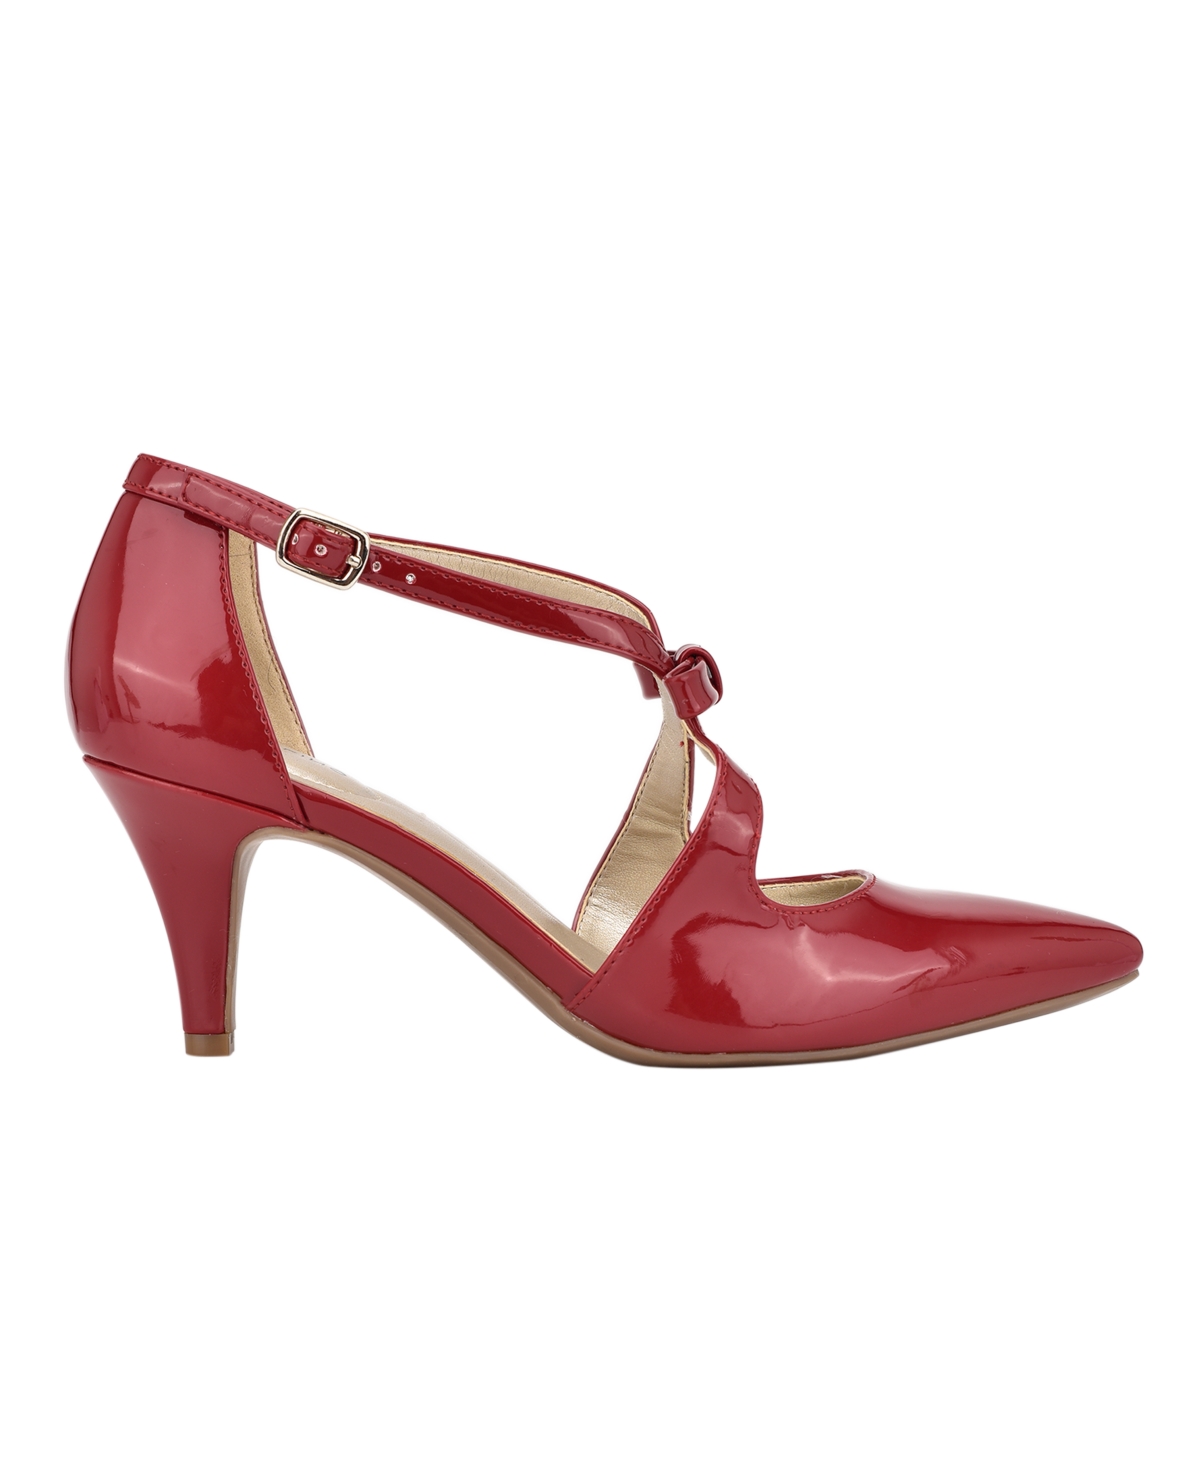 1950s Style Shoes | Heels, Flats, Boots, Sandals Bandolino Womens Zeffer Detail Dress Pumps - Red $51.75 AT vintagedancer.com